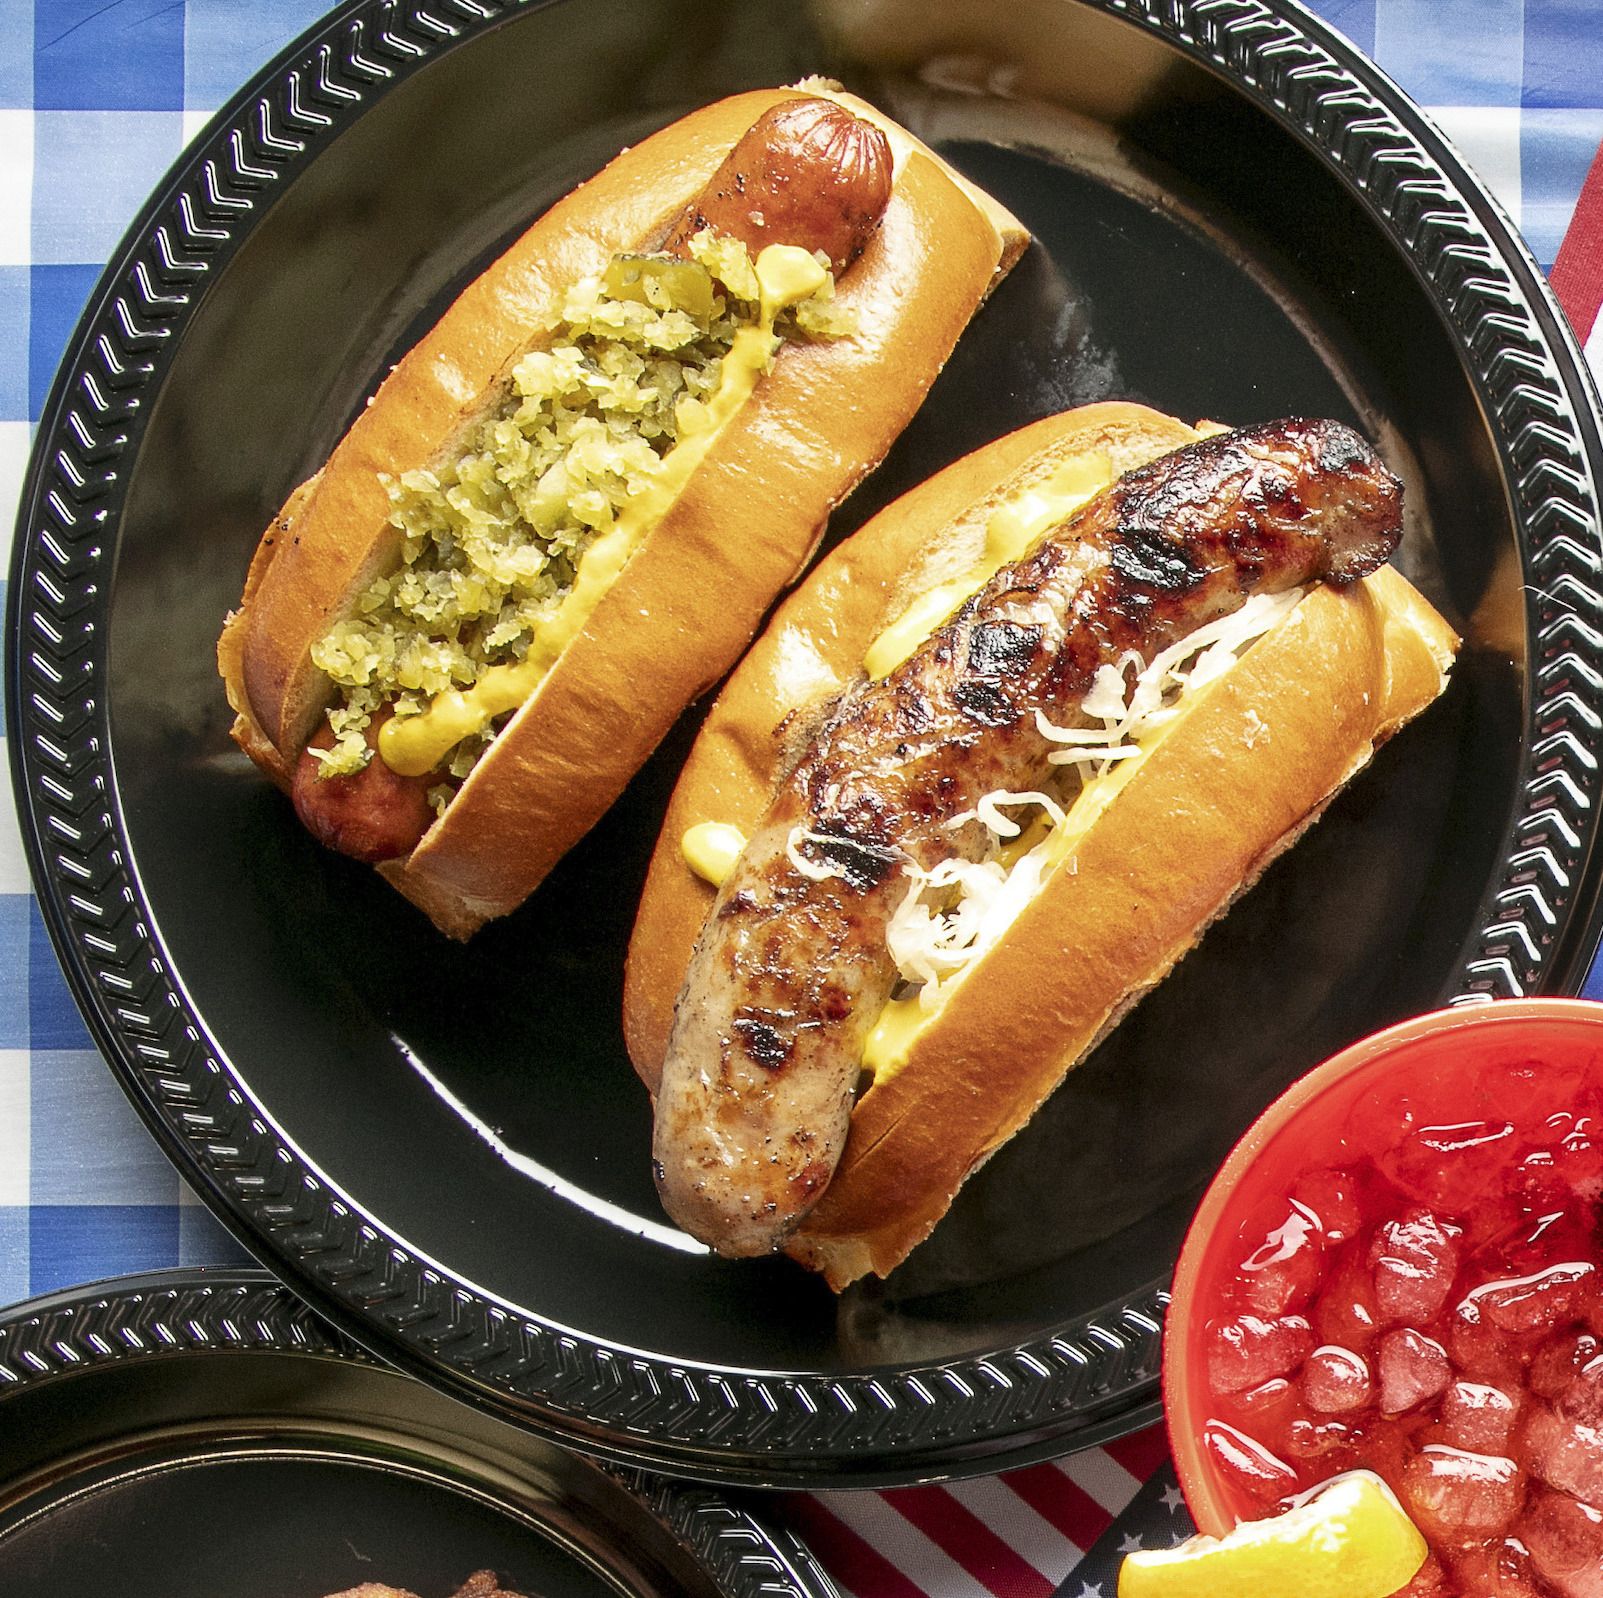 Best Hot Dogs And Bratwurst With Sauerkraut And Relish Recipe